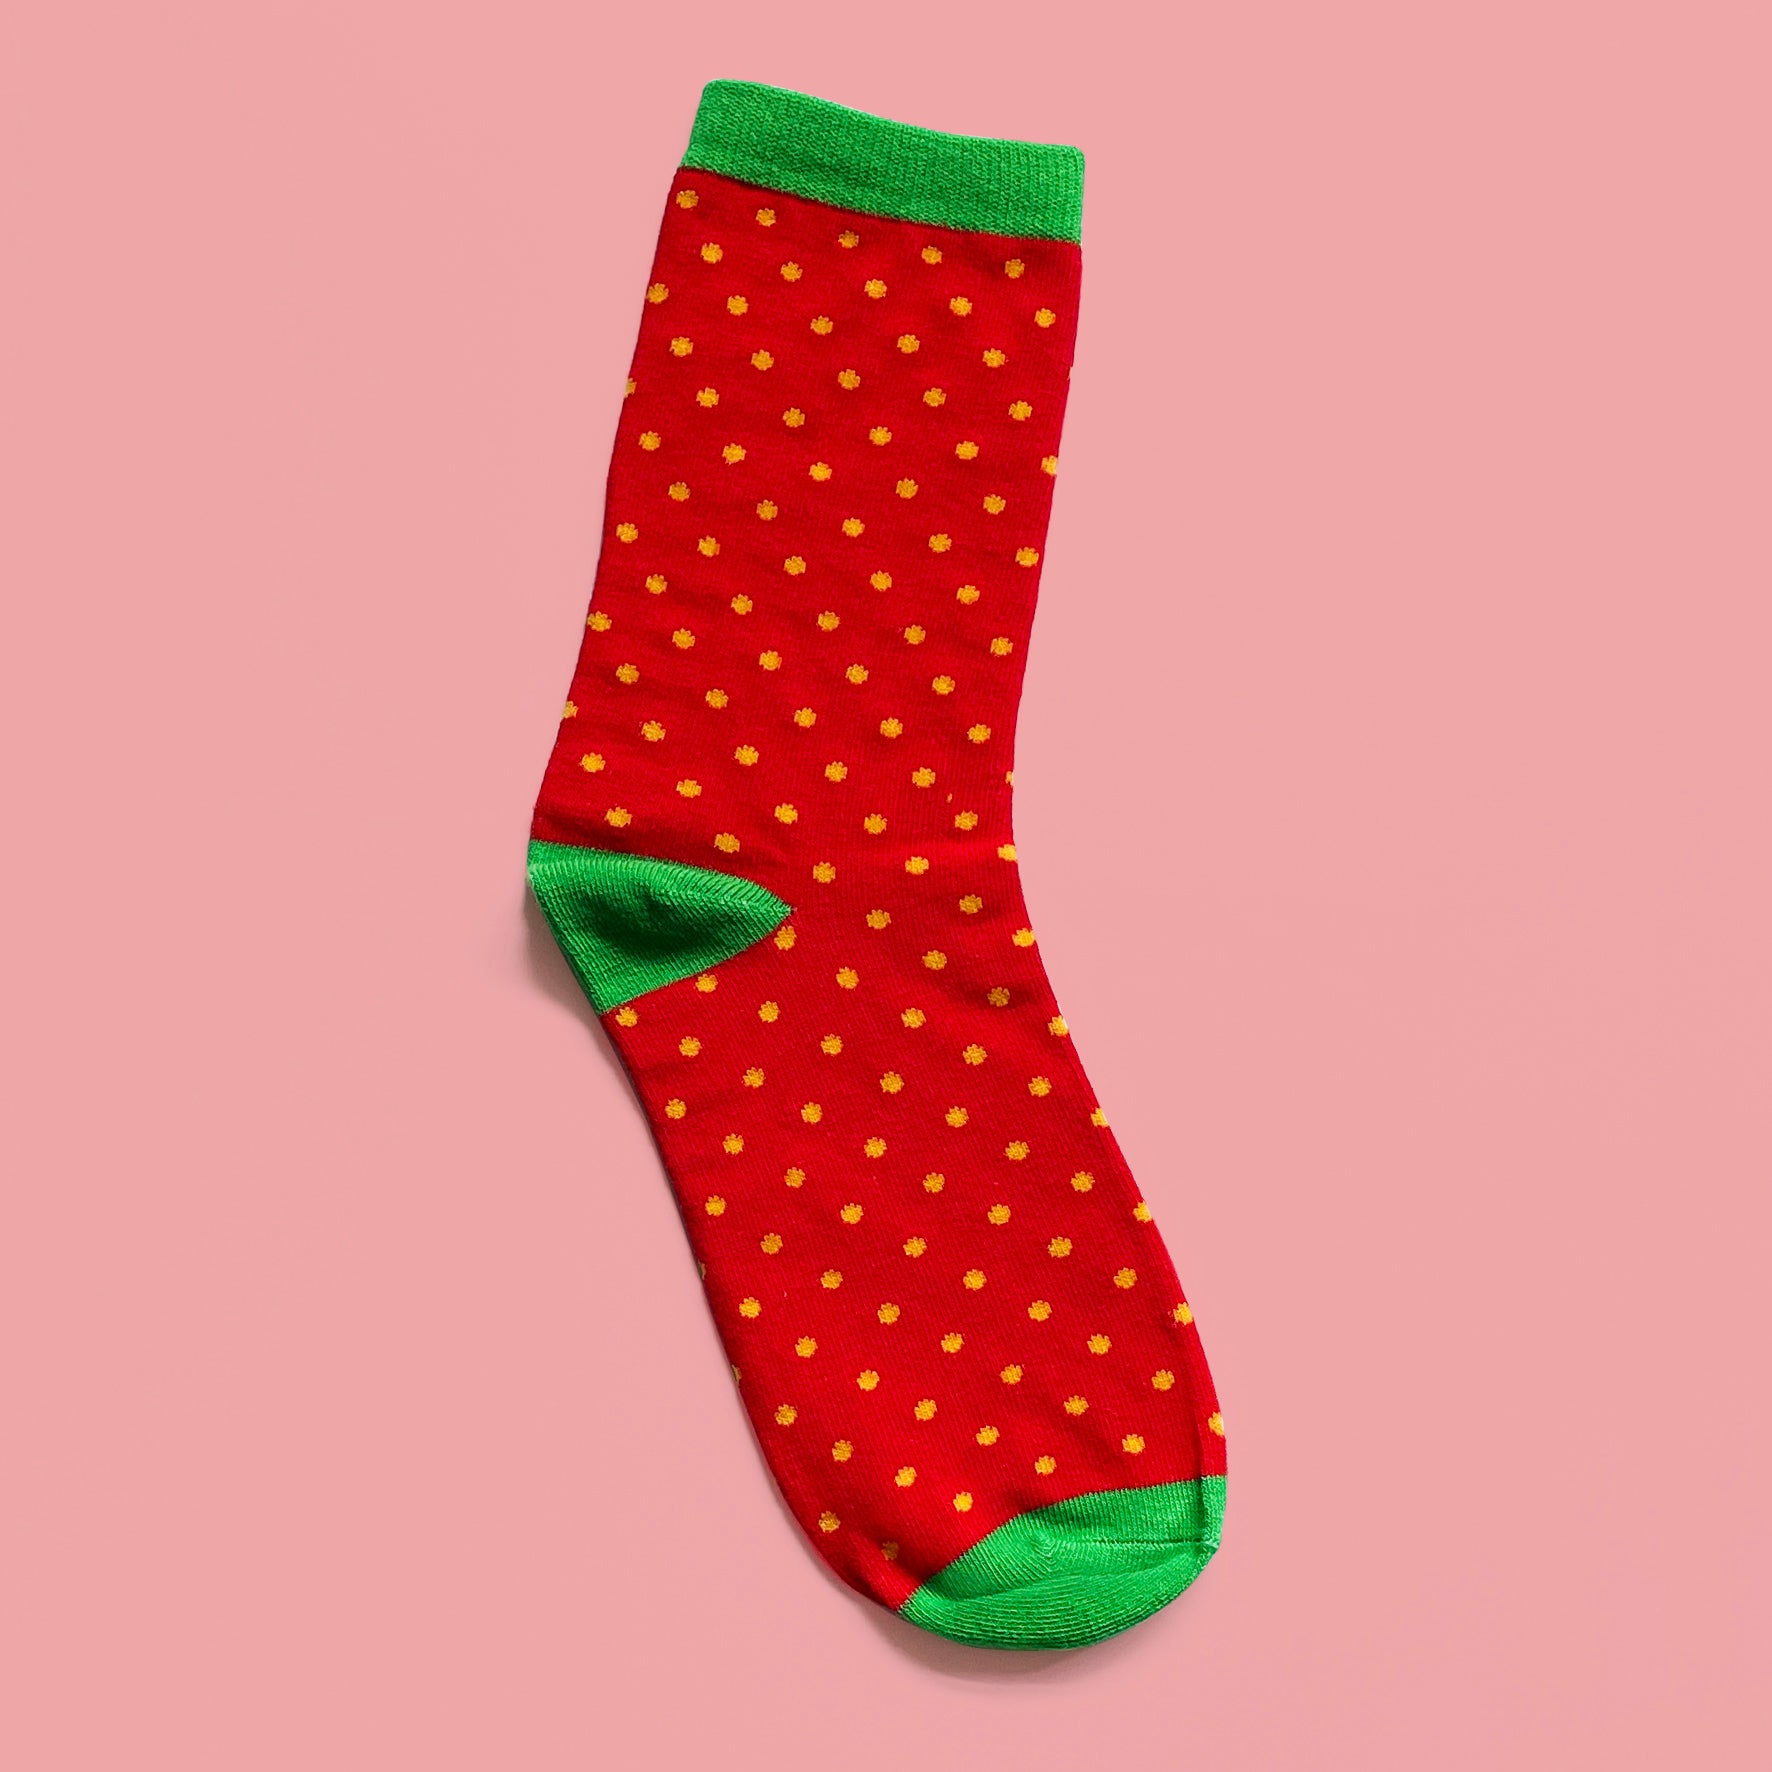 The Single Socks I Amanda Strawberries